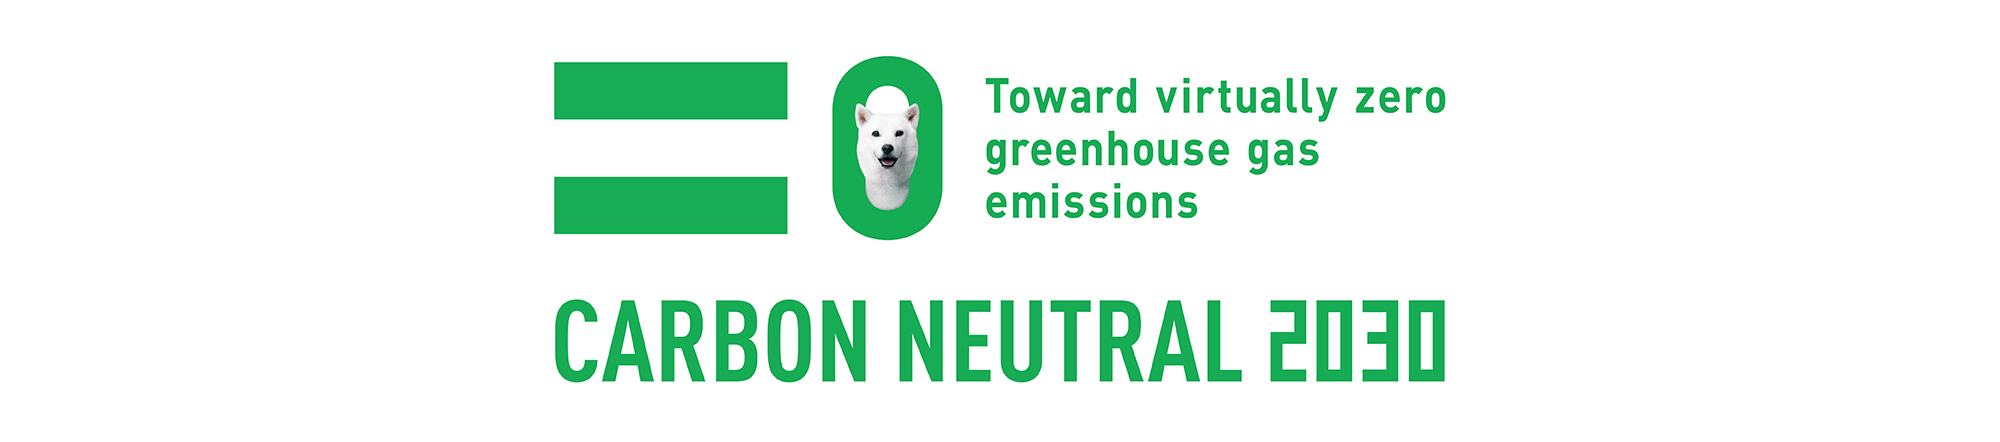 CARBON NEUTRAL 2030 Toward virtually zero greenhouse gas emissions